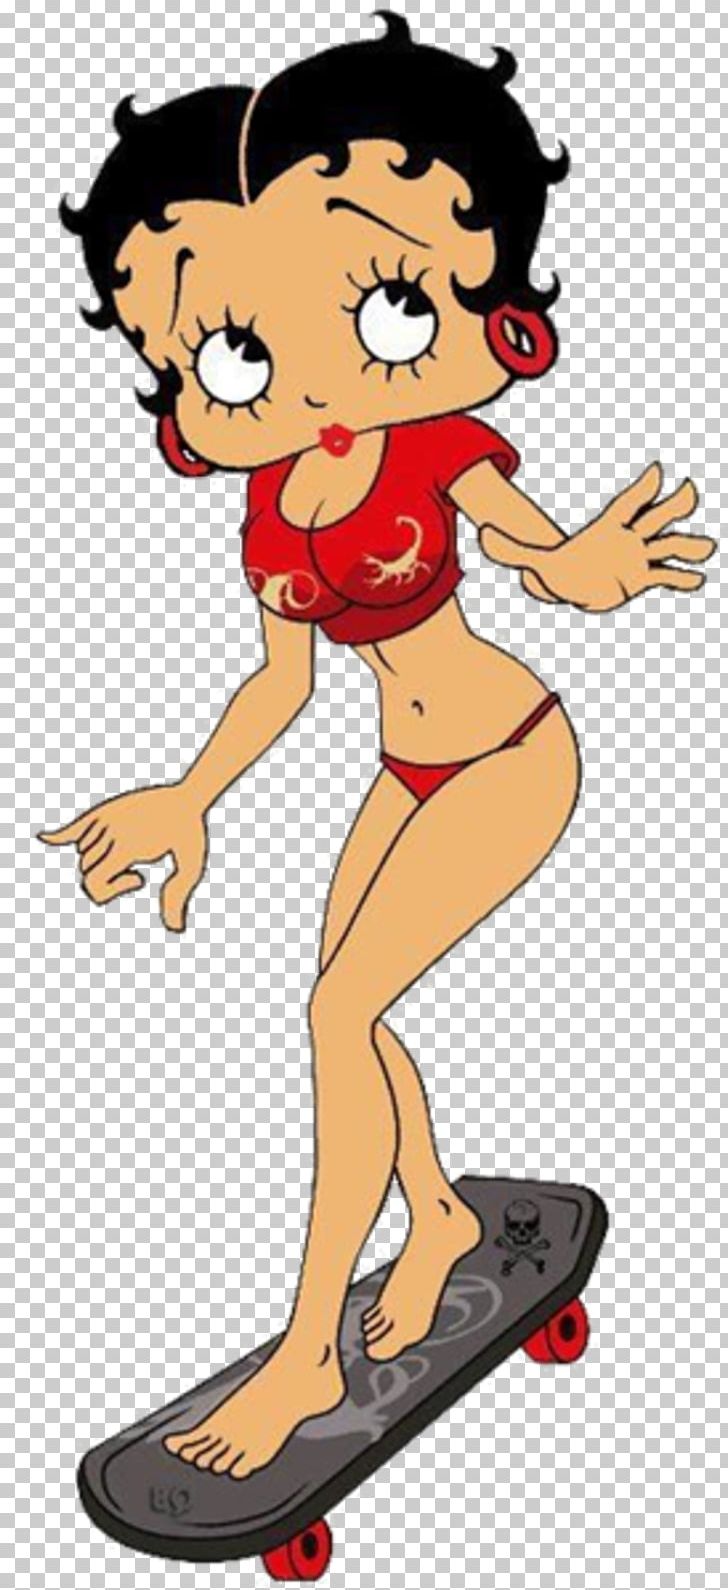 Betty Boop Jessica Rabbit Cartoon Idea PNG, Clipart, Animaatio, Animated Cartoon, Animation, Arm, Art Free PNG Download